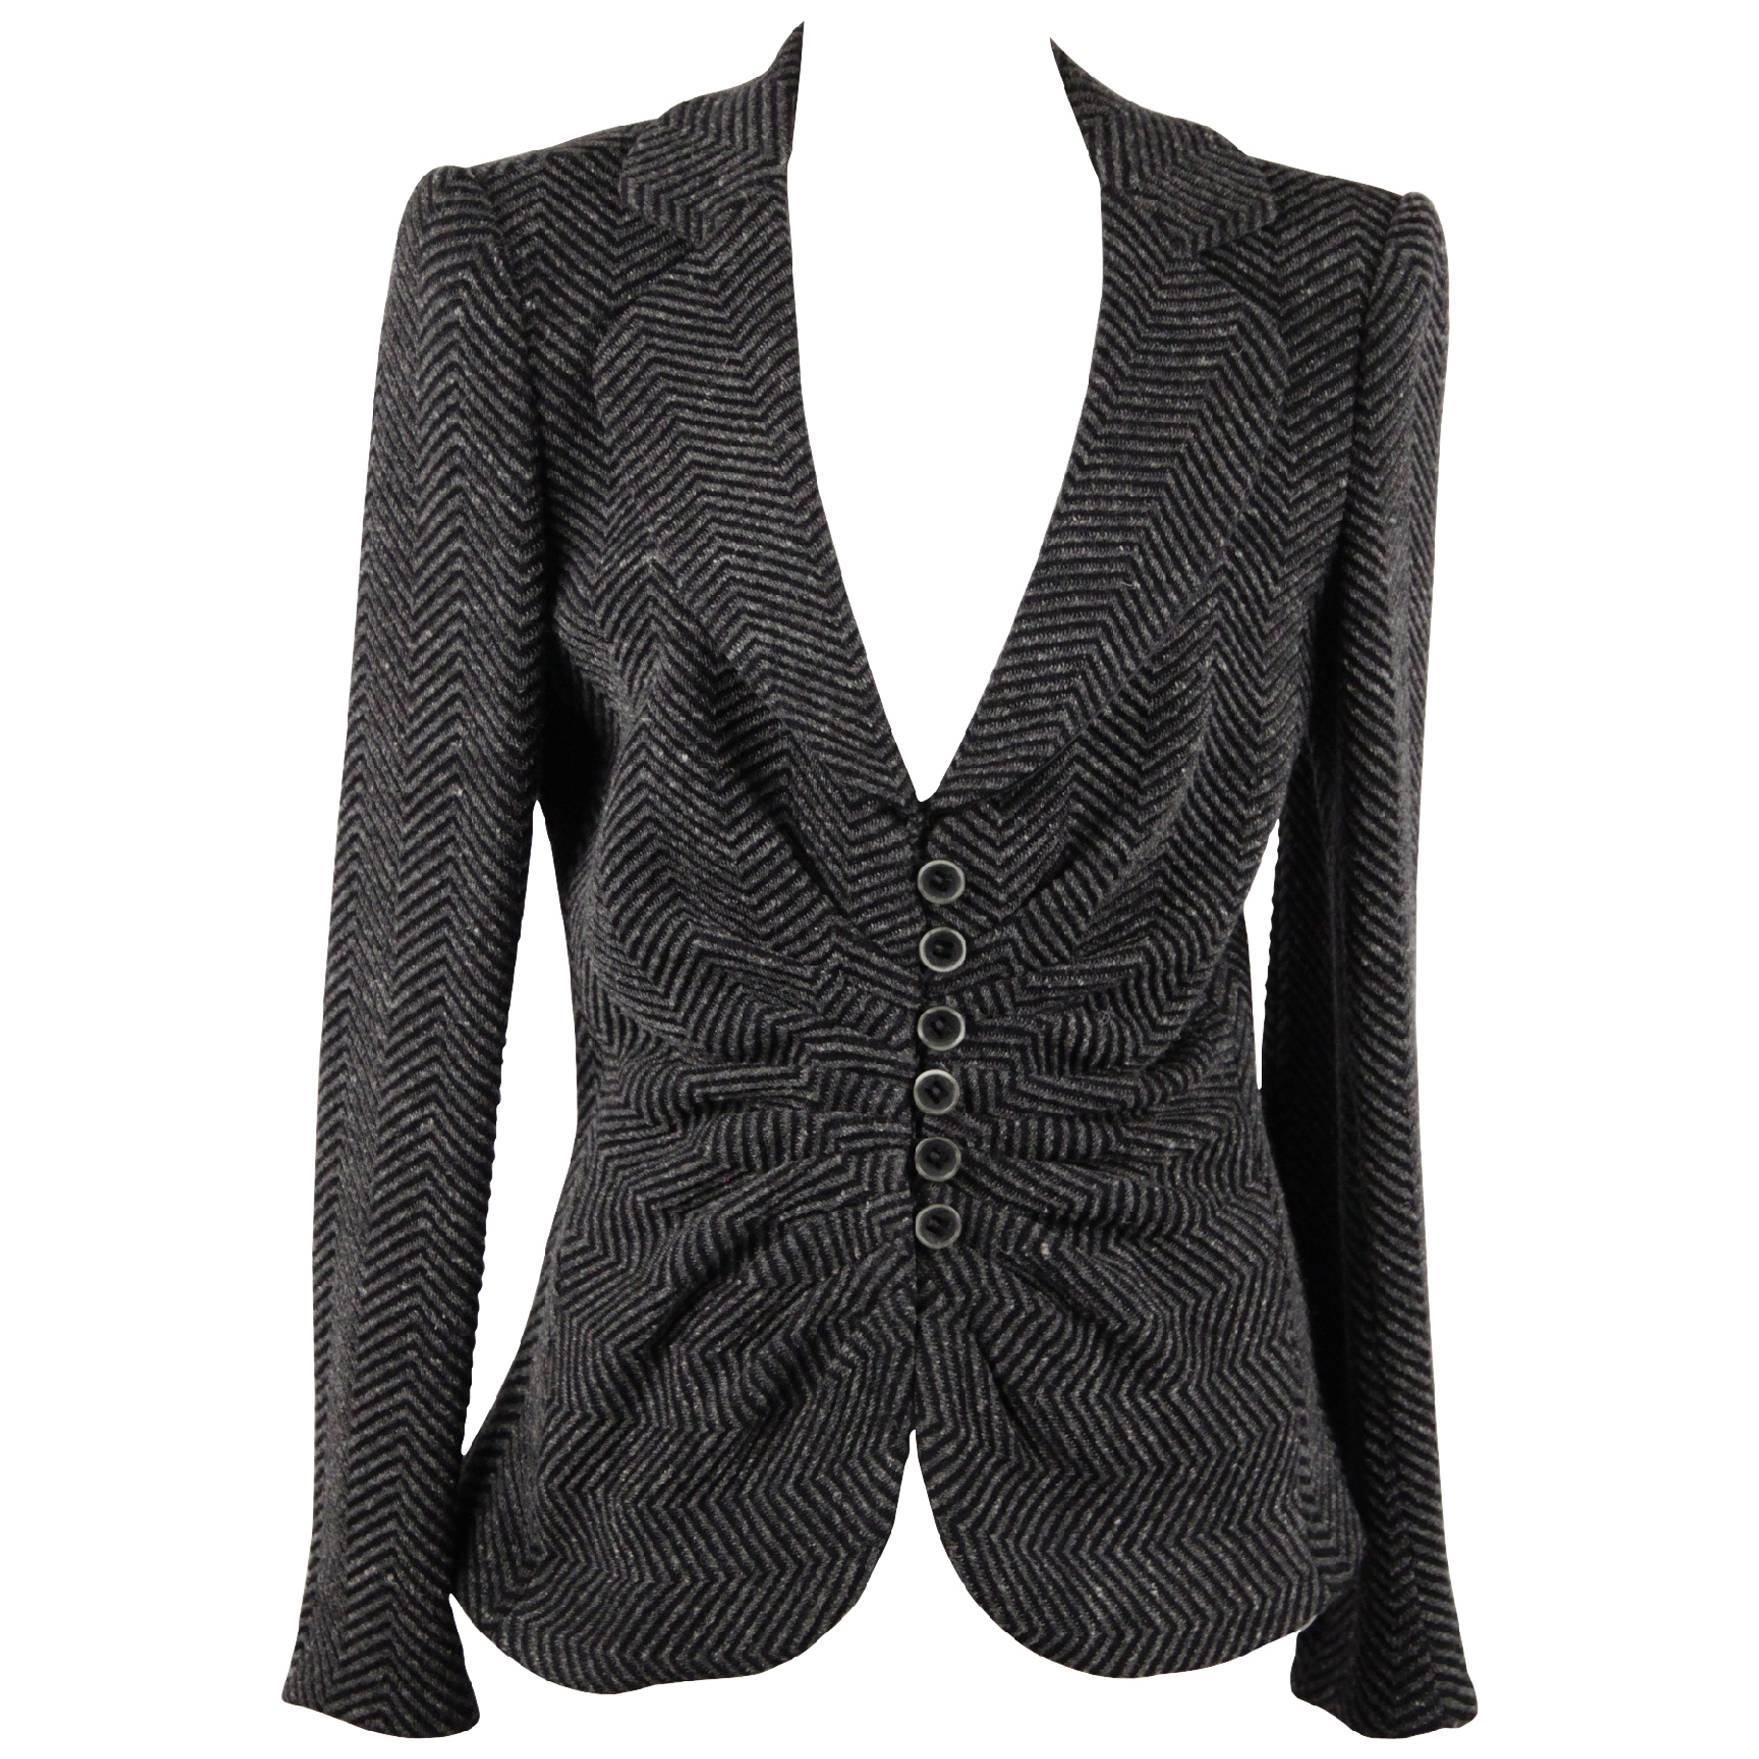 ARMANI COLLEZIONI Gray Textured Wool Blend BLAZER Jacket w/ DRAPING Size 44